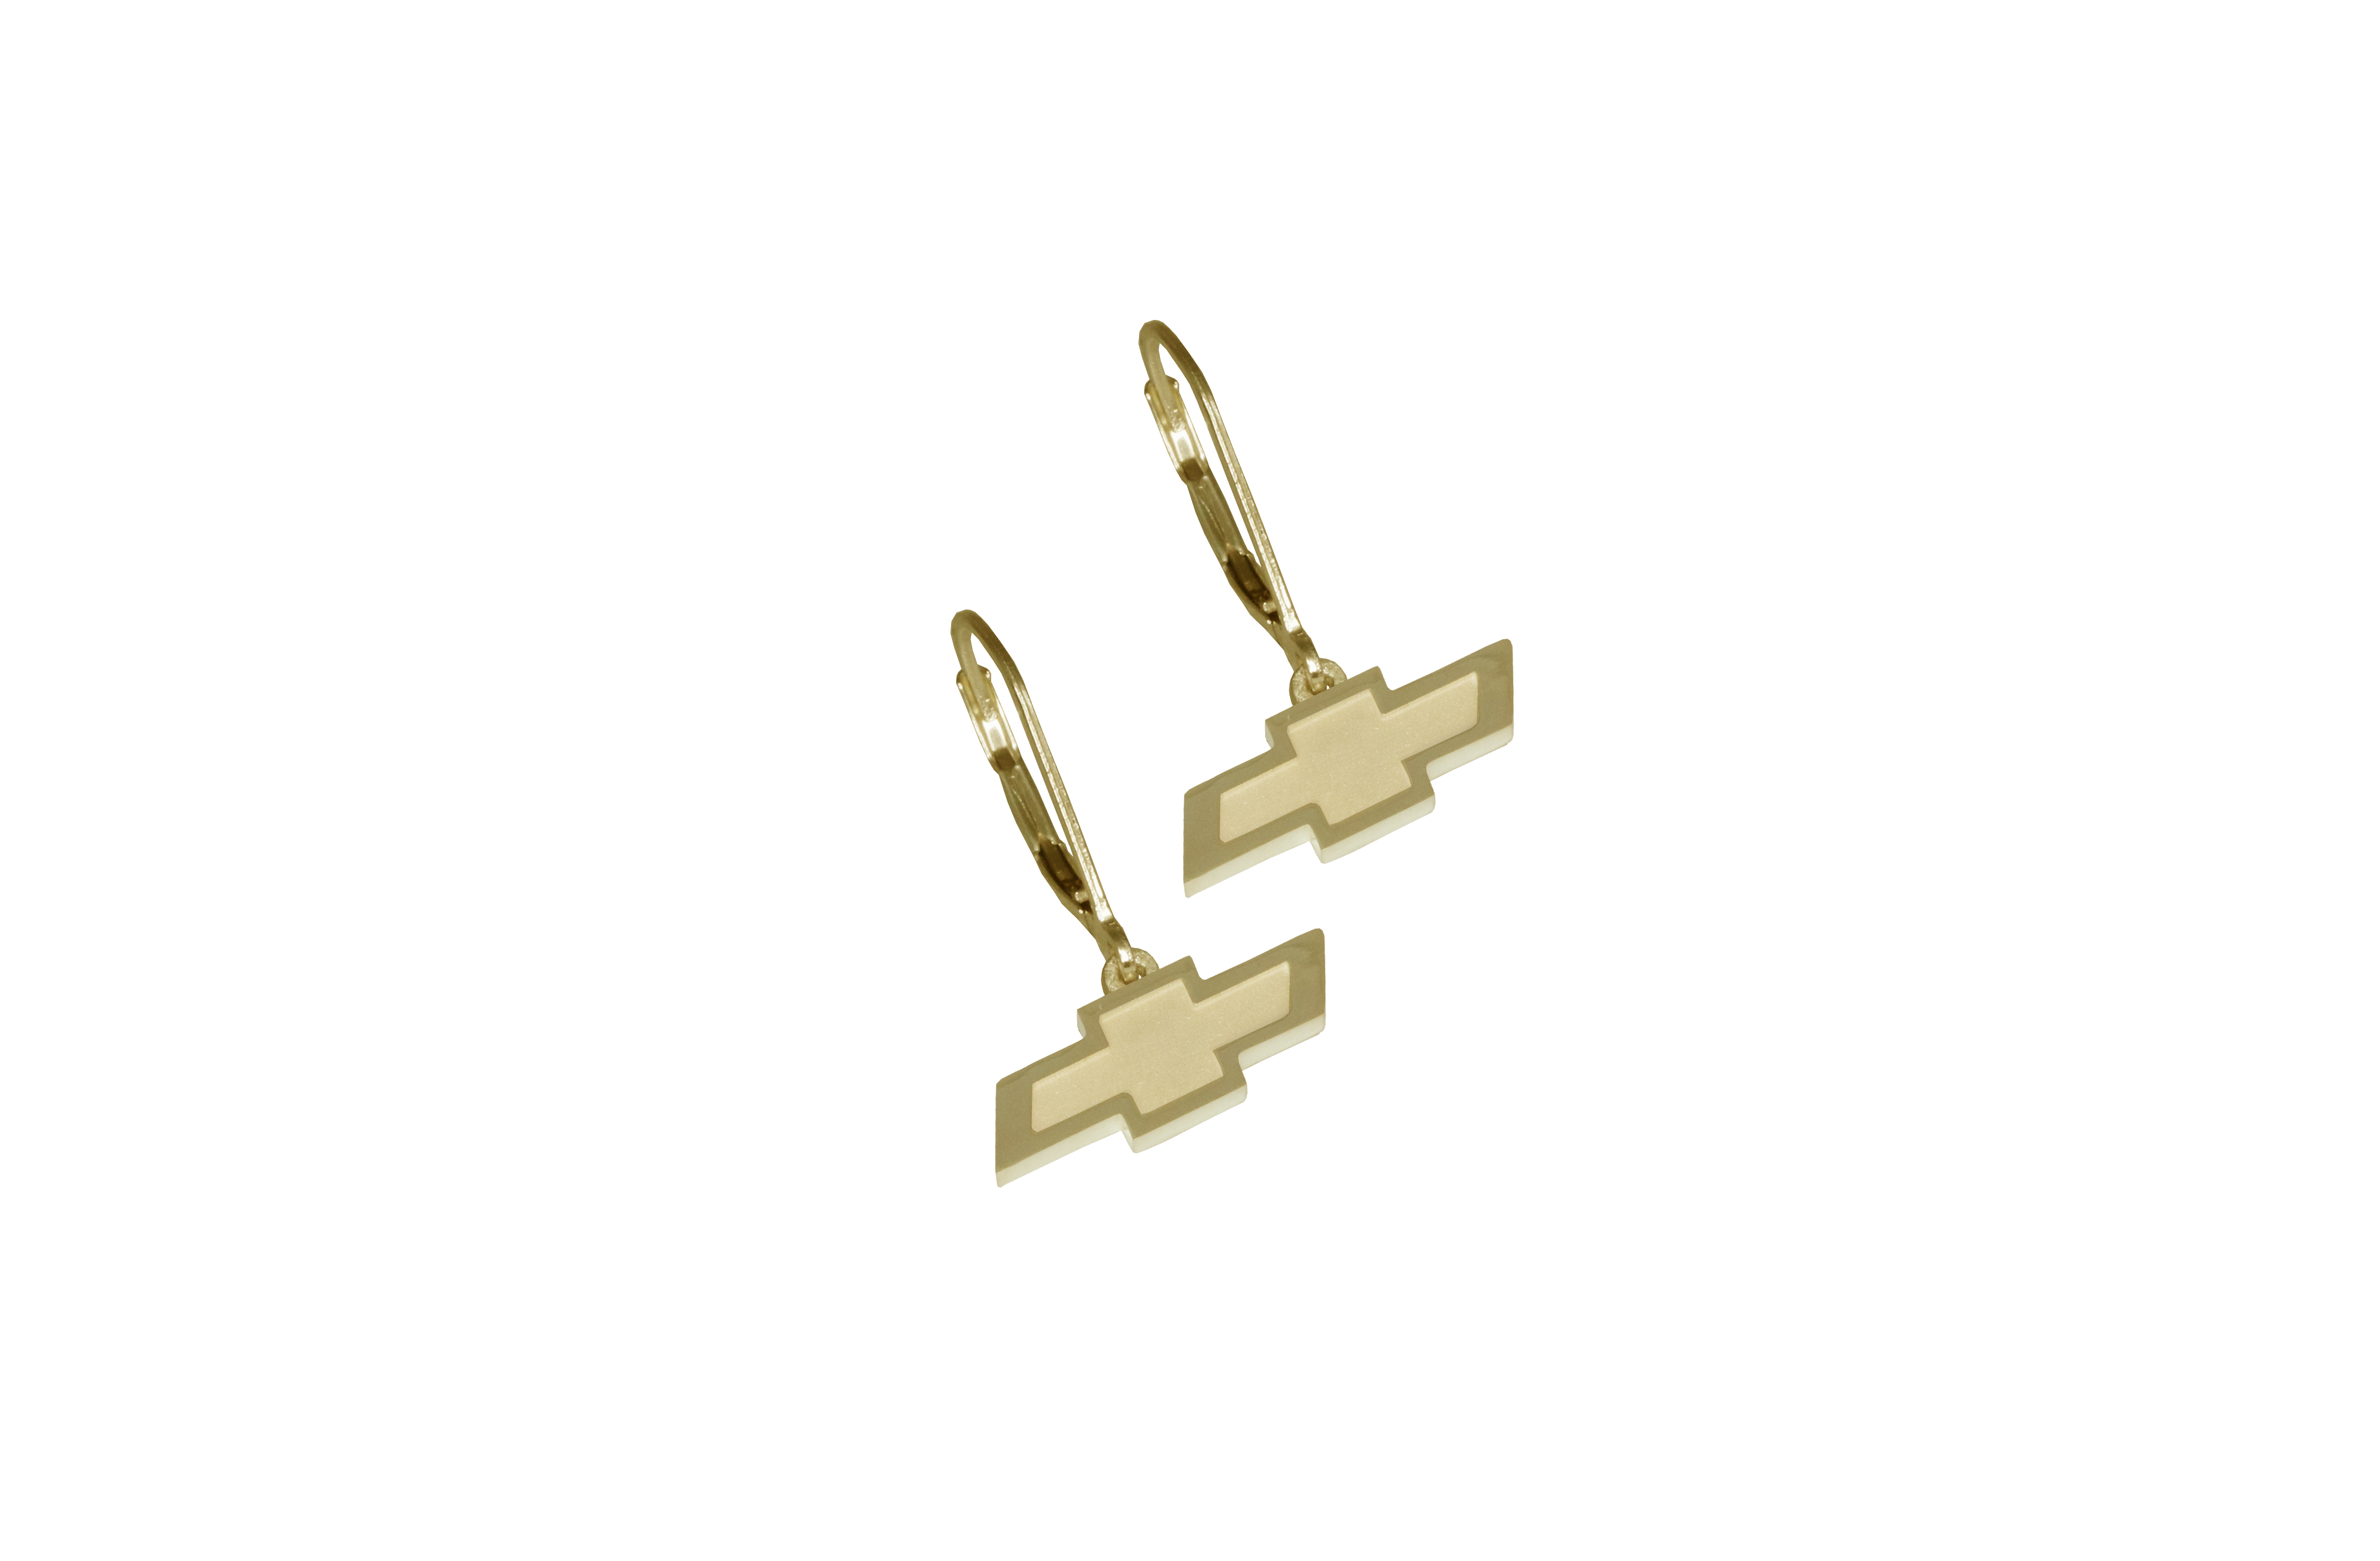 Chevy Bowtie Emblem | 14k Gold | 1/2" Leverback Earrings